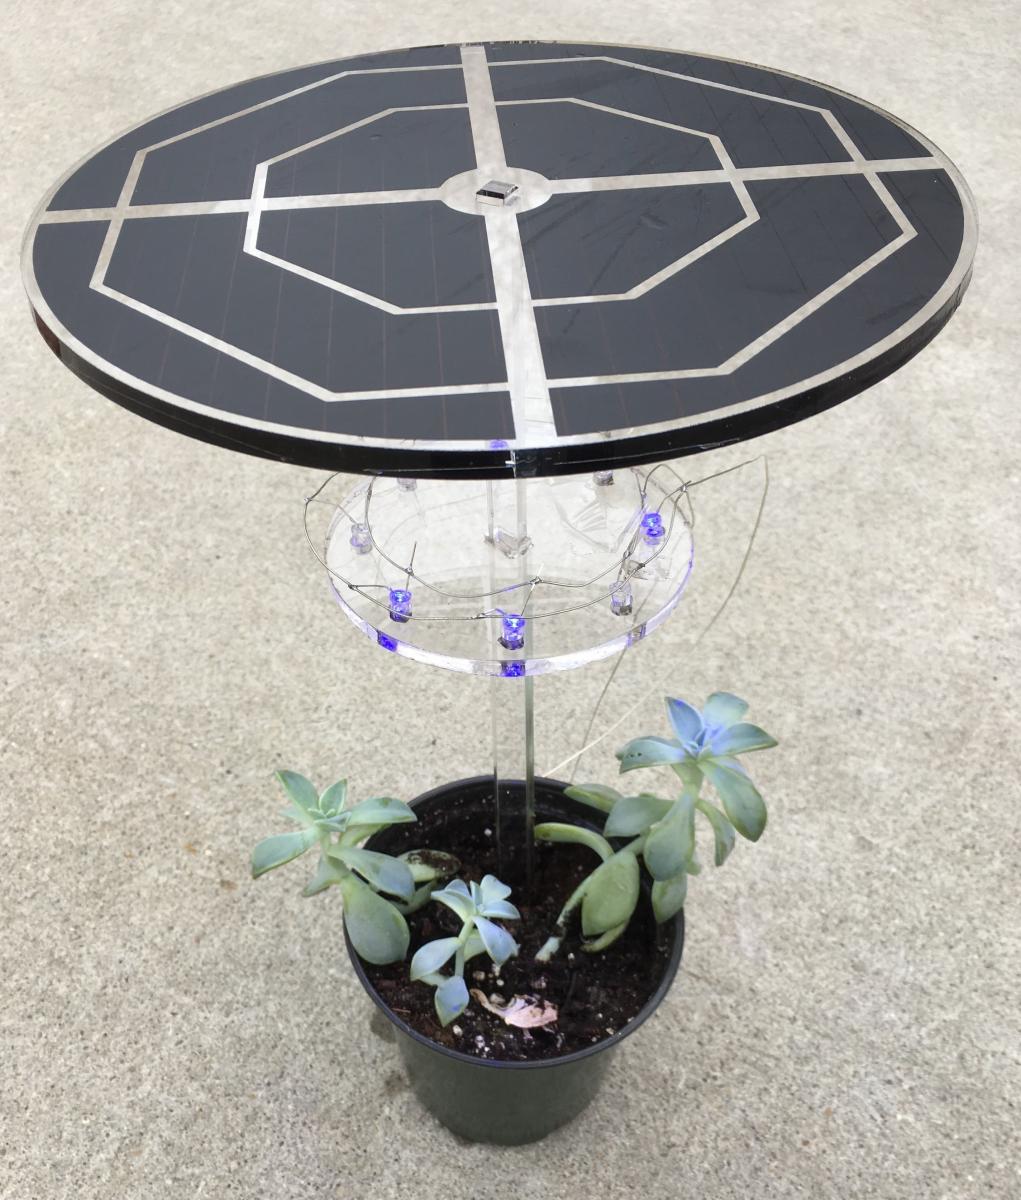 A grow light supplying light for a pot of succulents